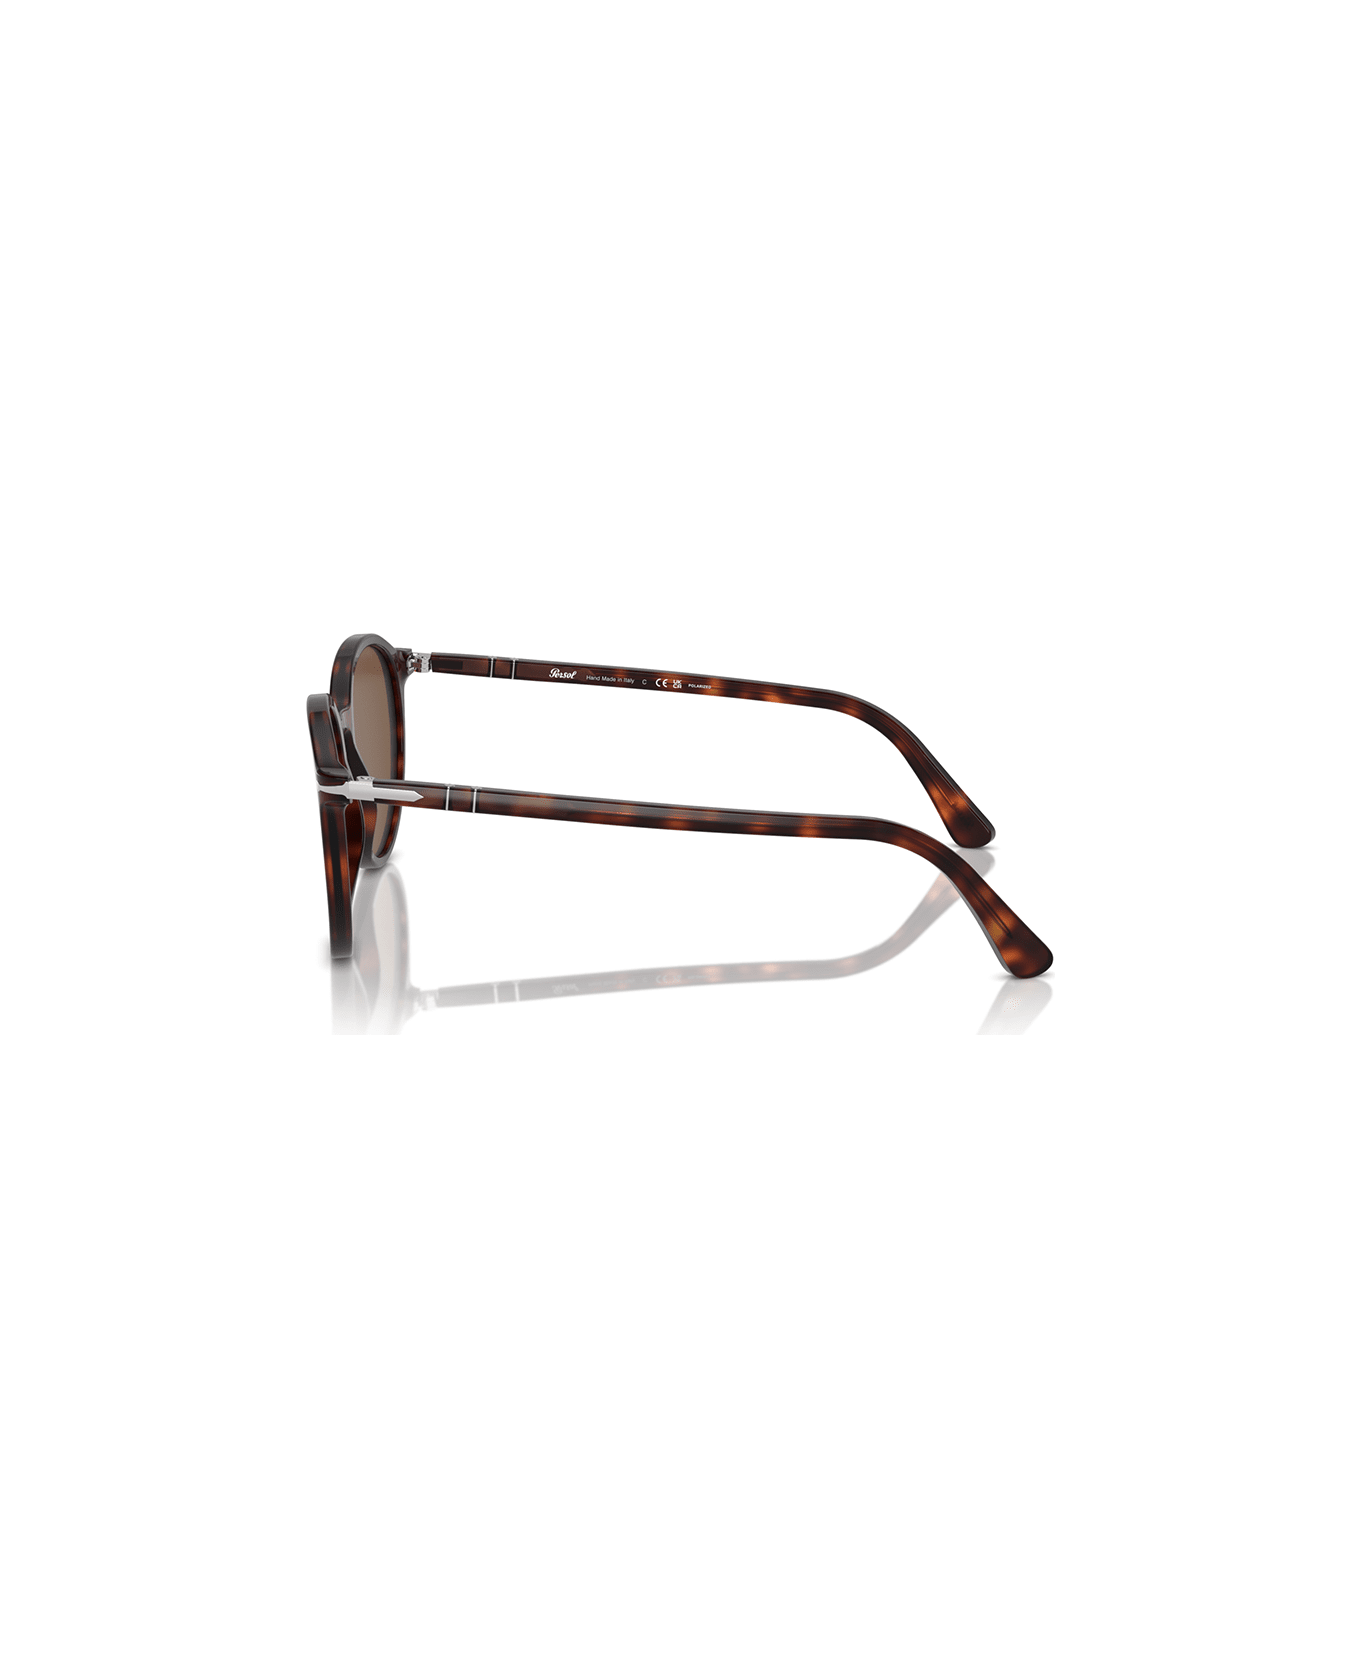 Persol Sunglasses - Havana/Marrone